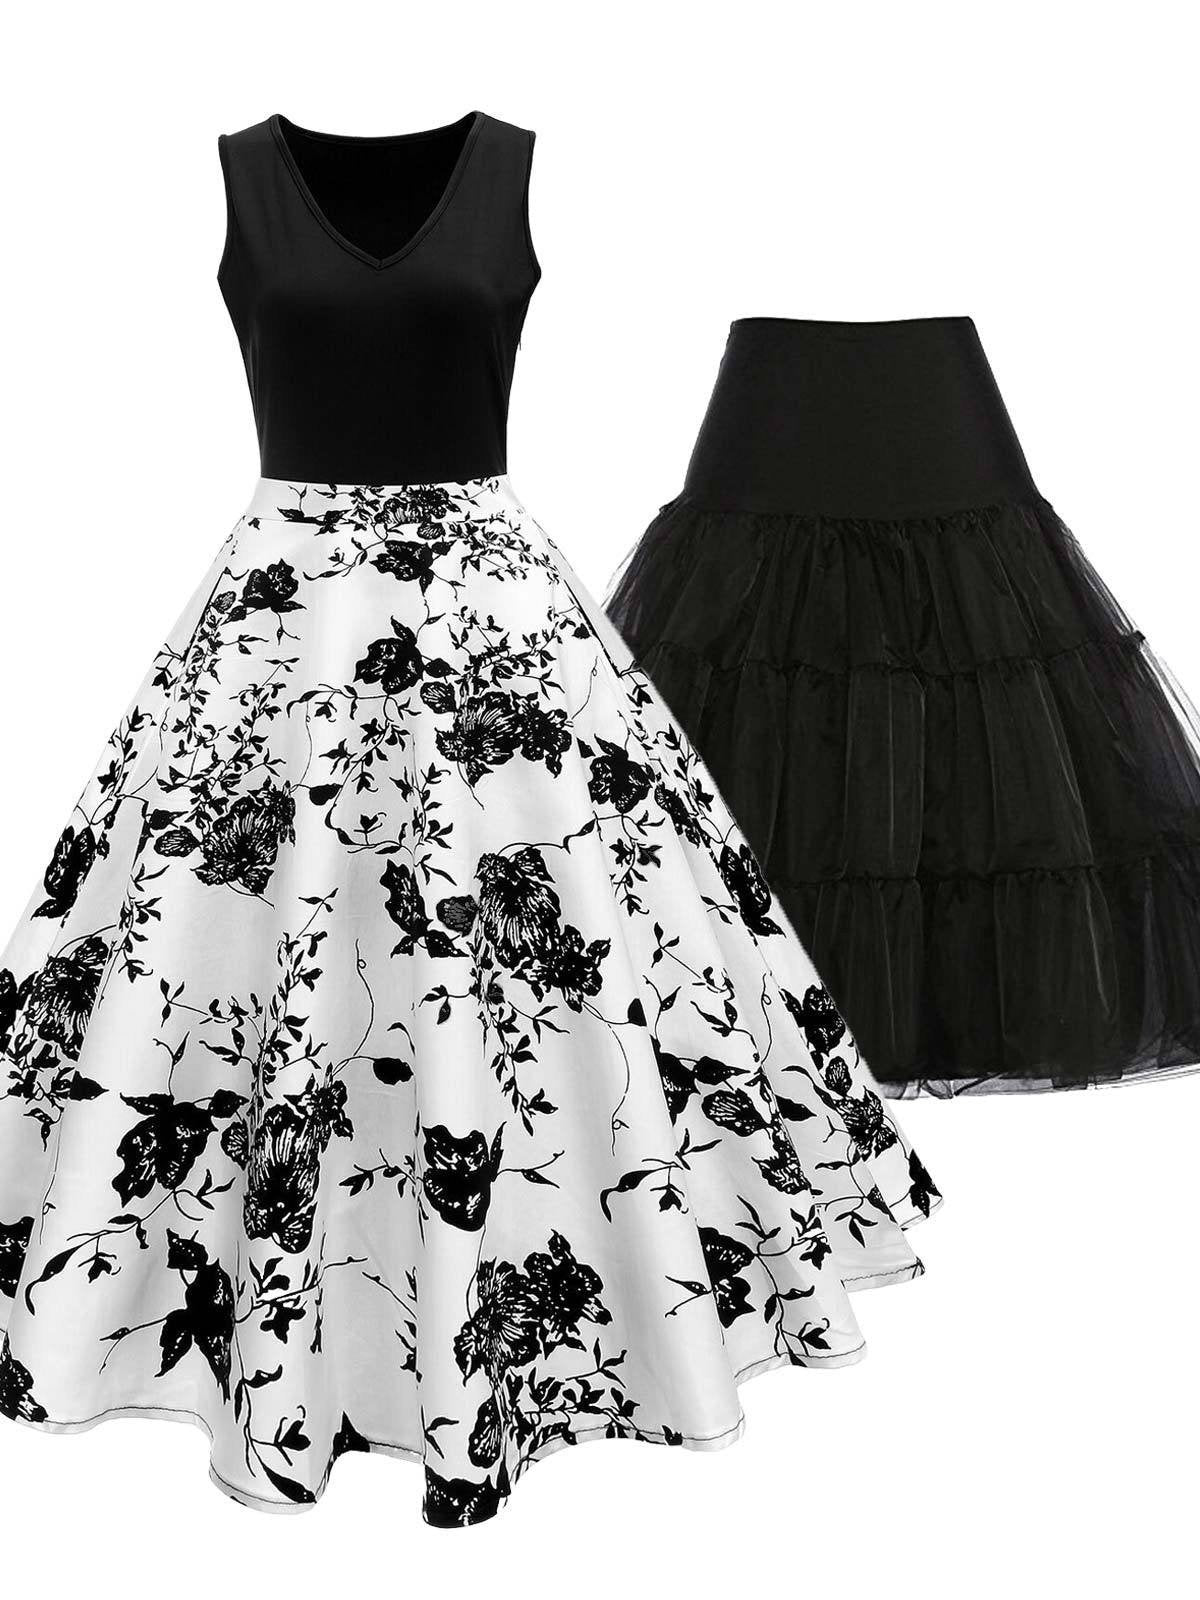 2PCS Top Seller 1950s Dress & Black Petticoat